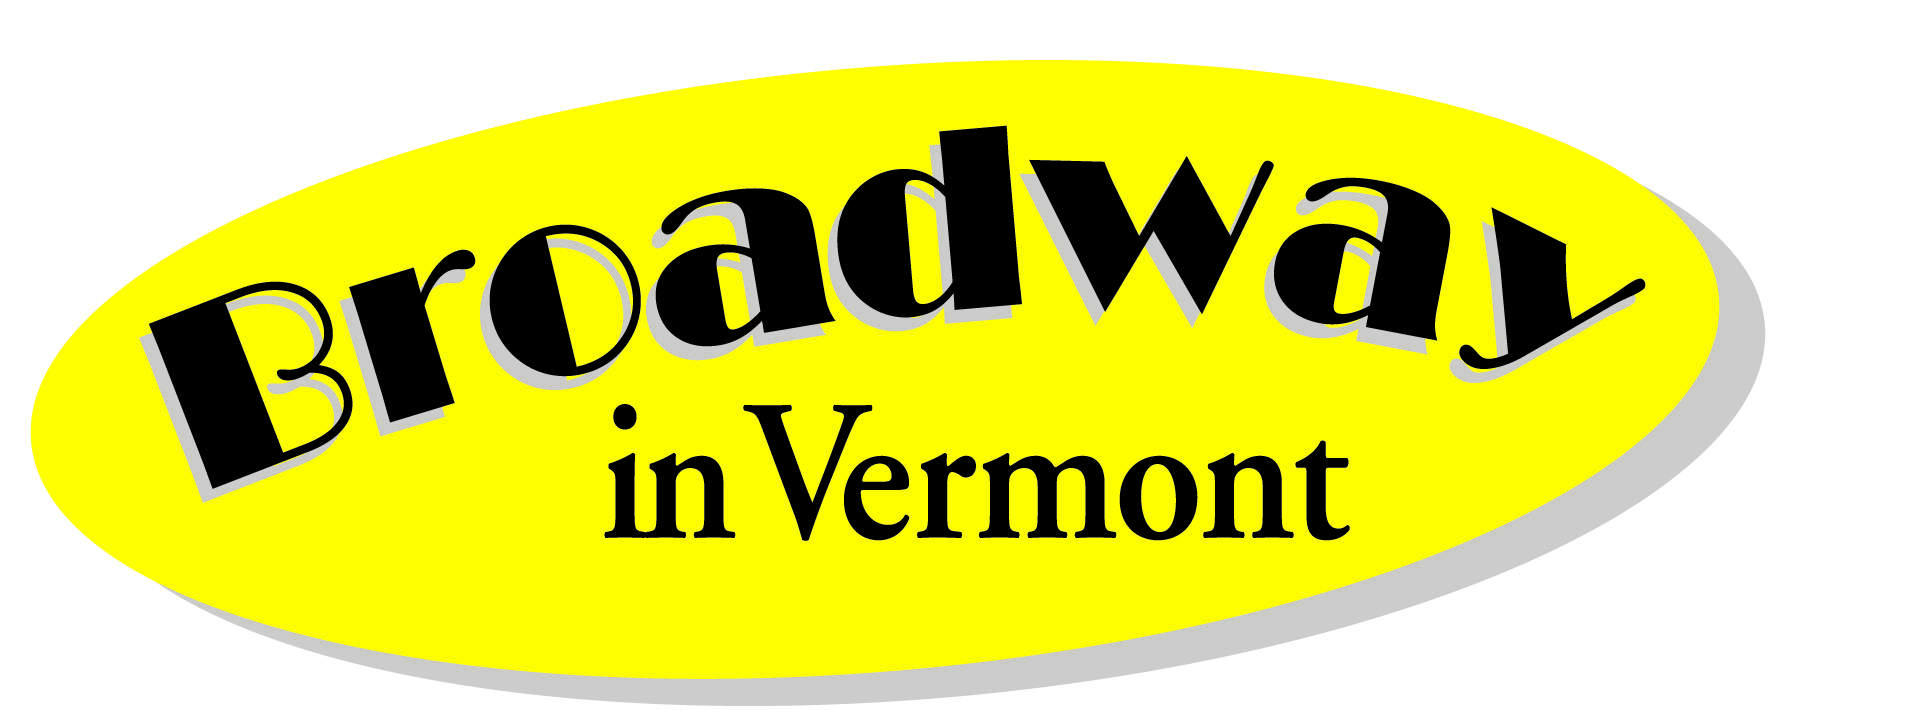 Broadway In Vermont